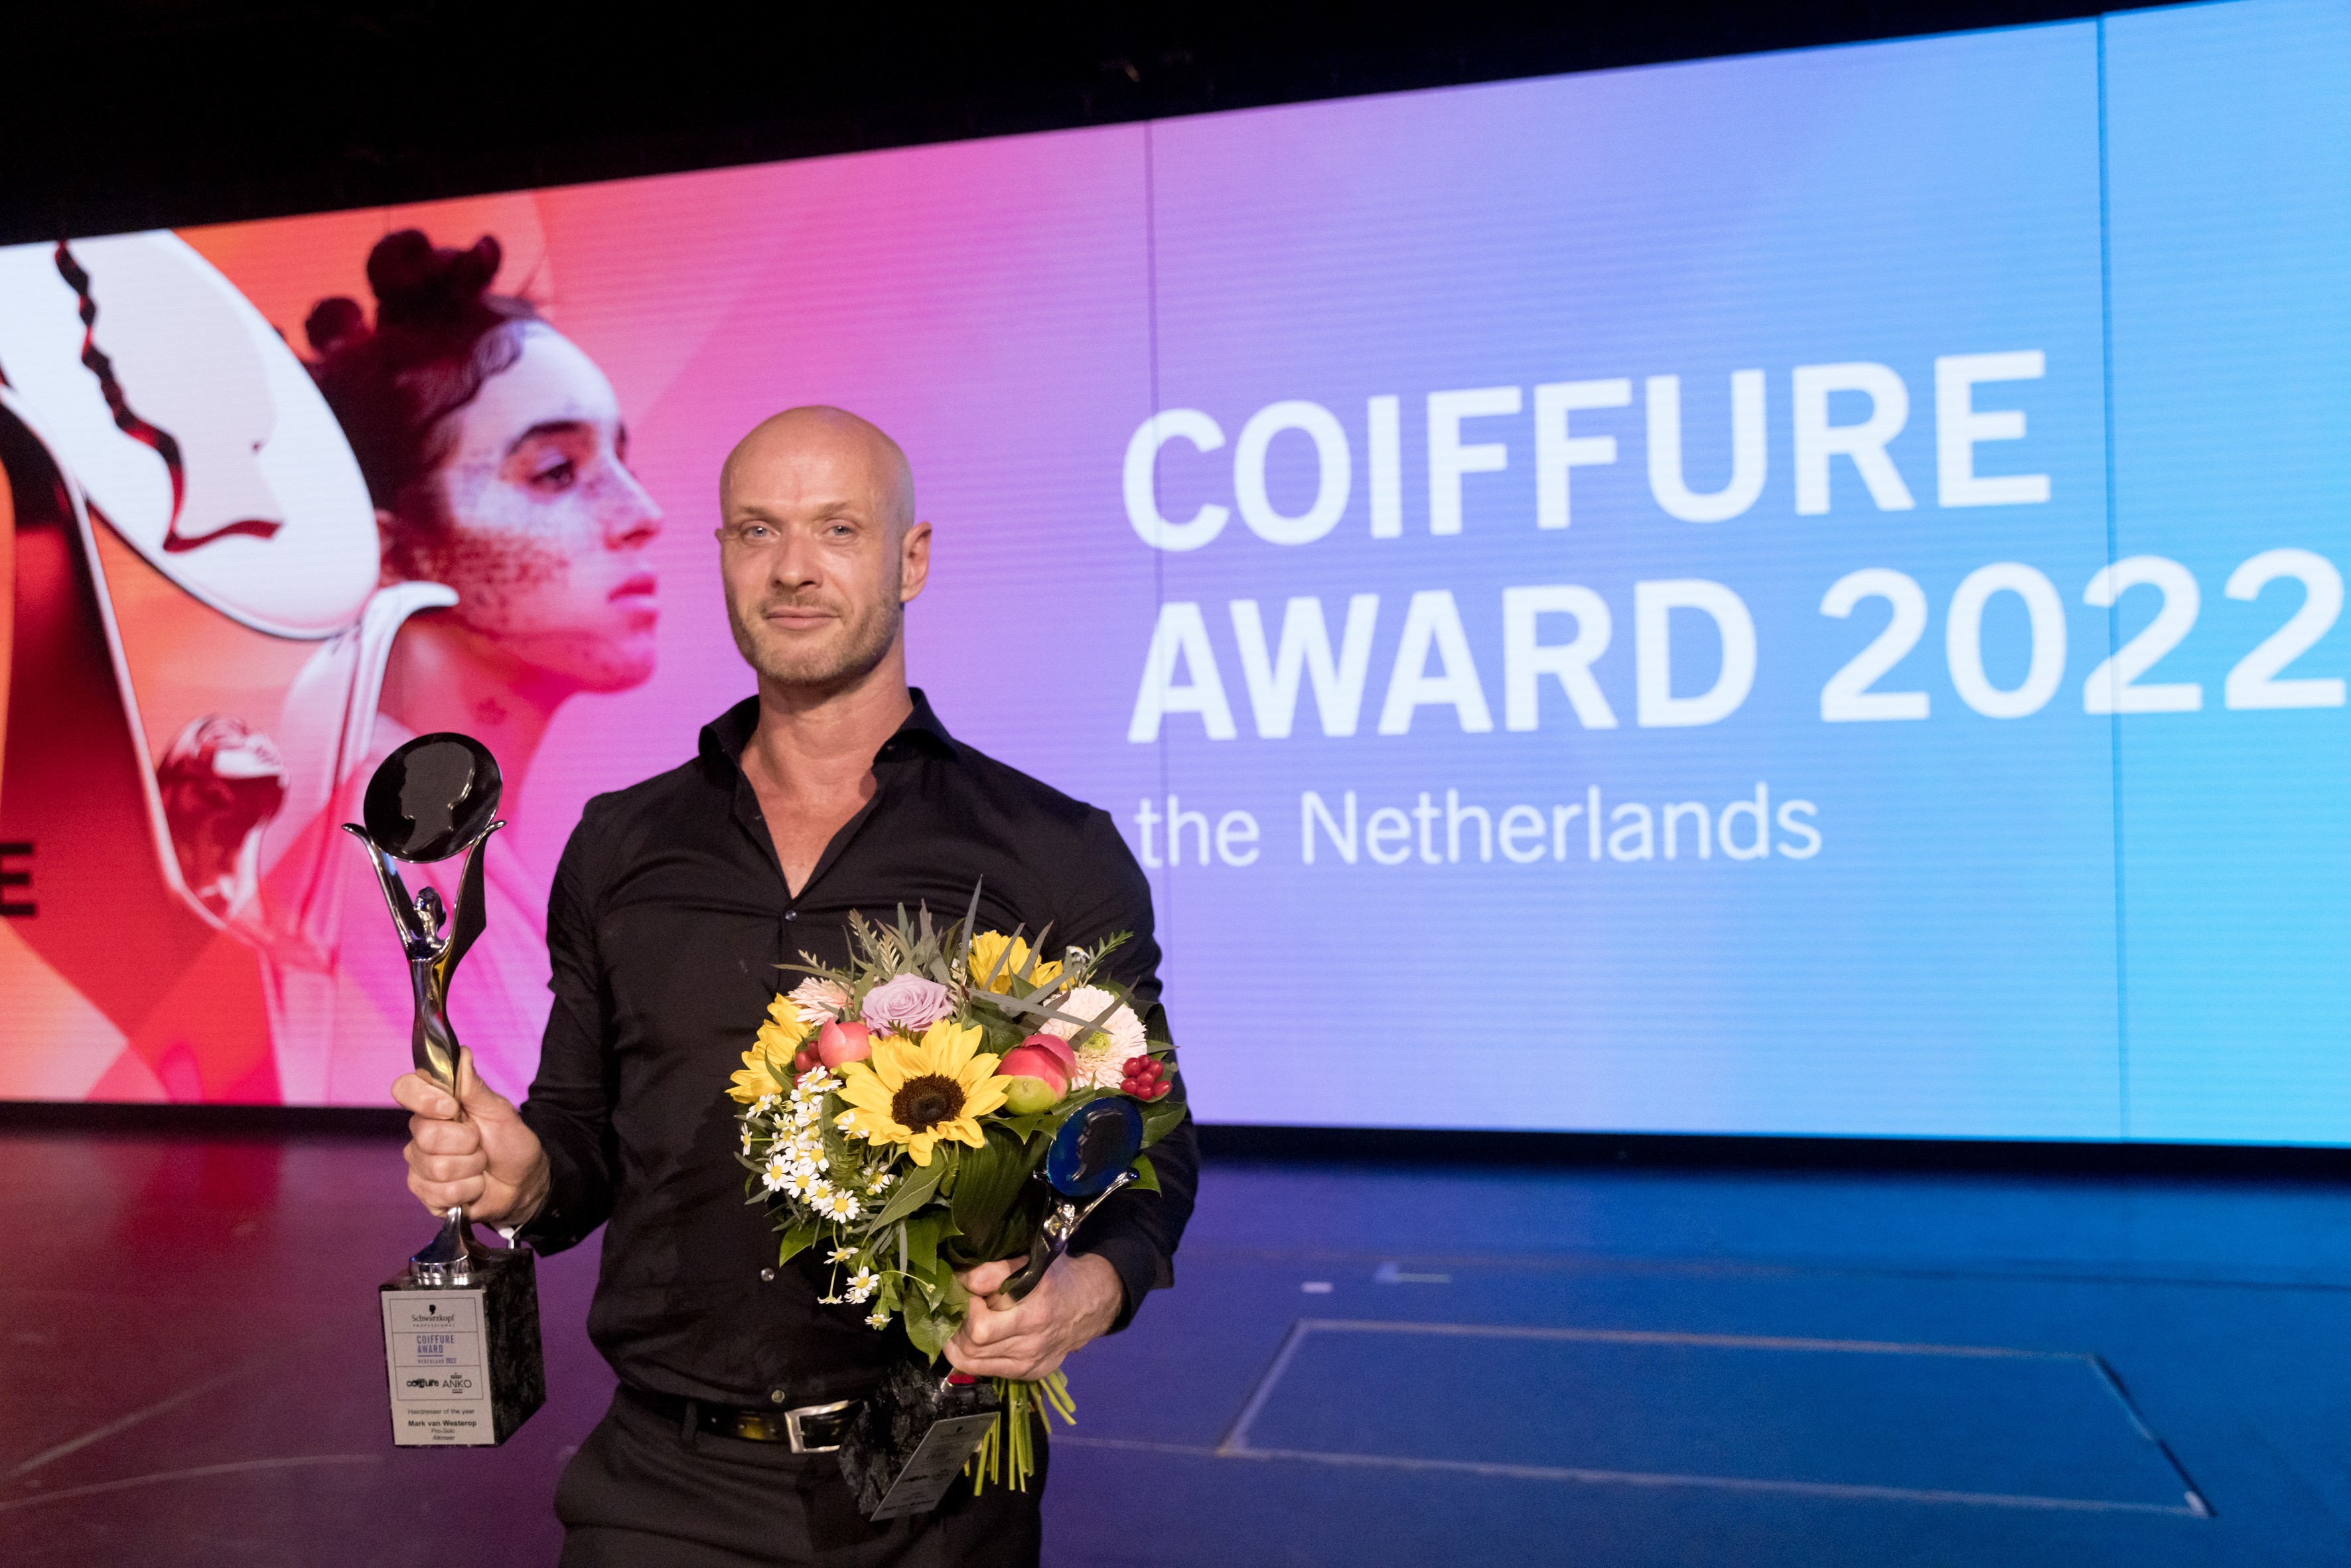 Coiffure Award